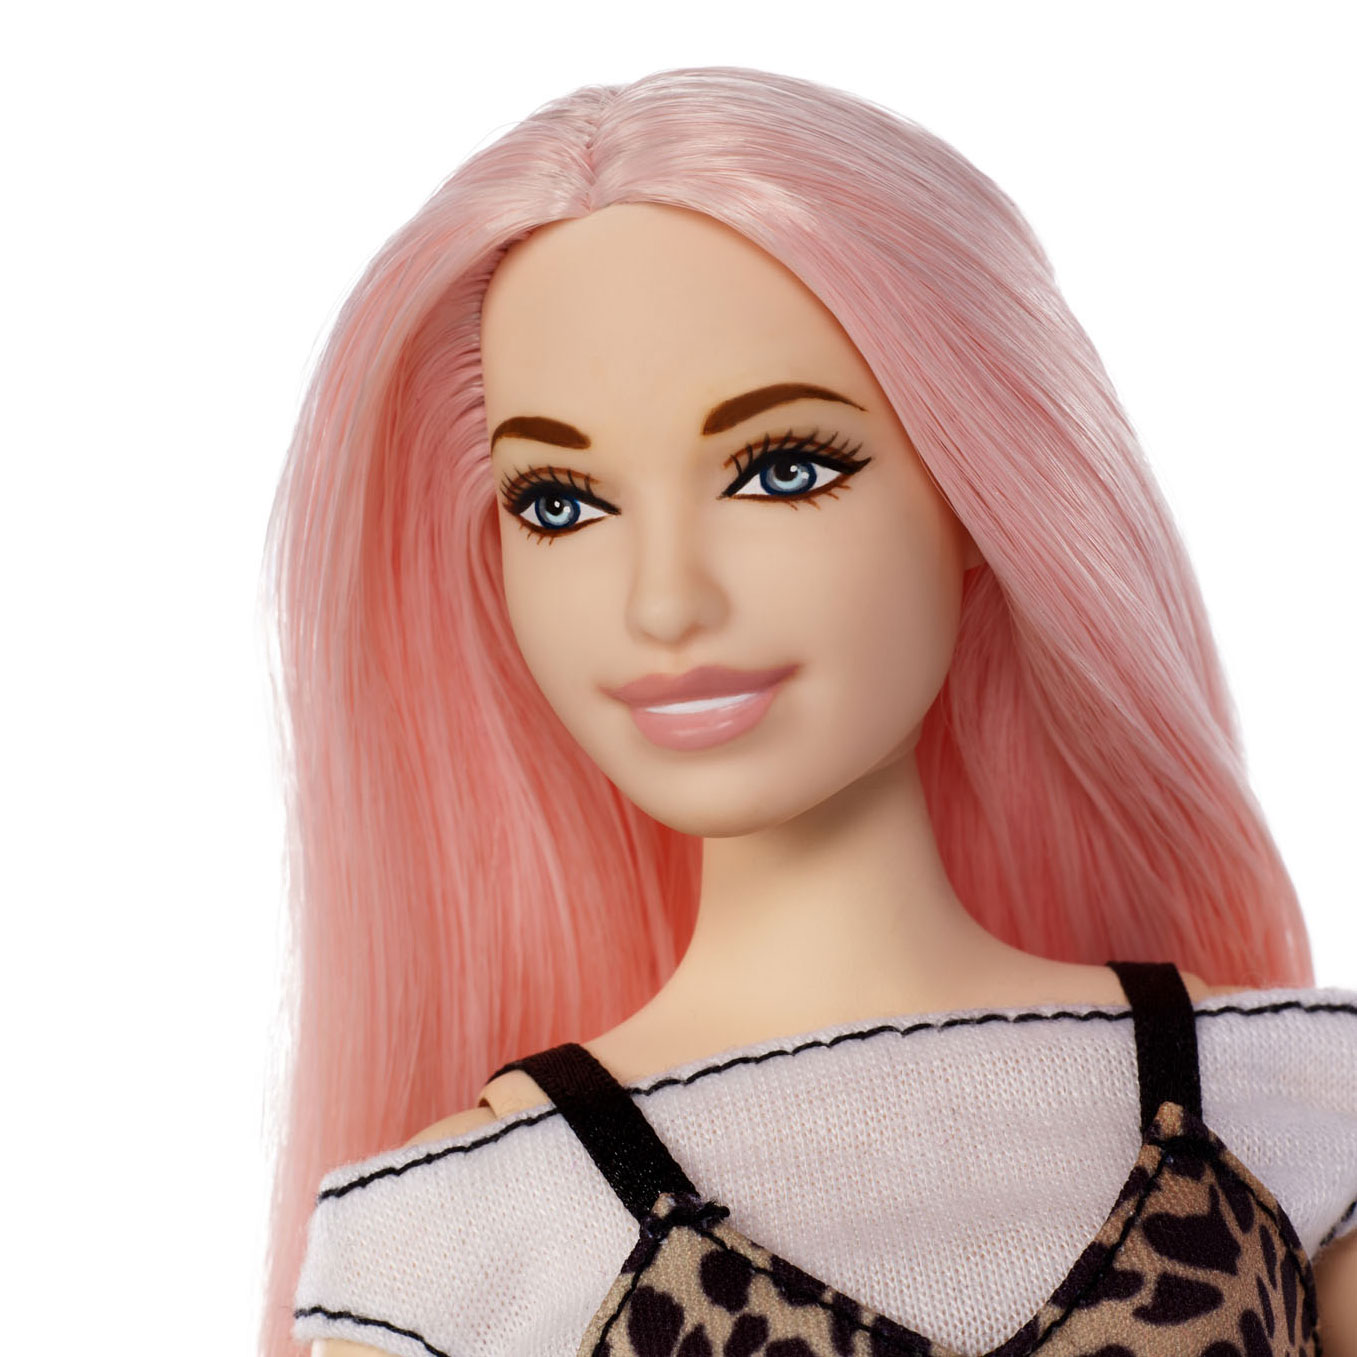 Barbie Fashionistas Pop - Leopard Dress